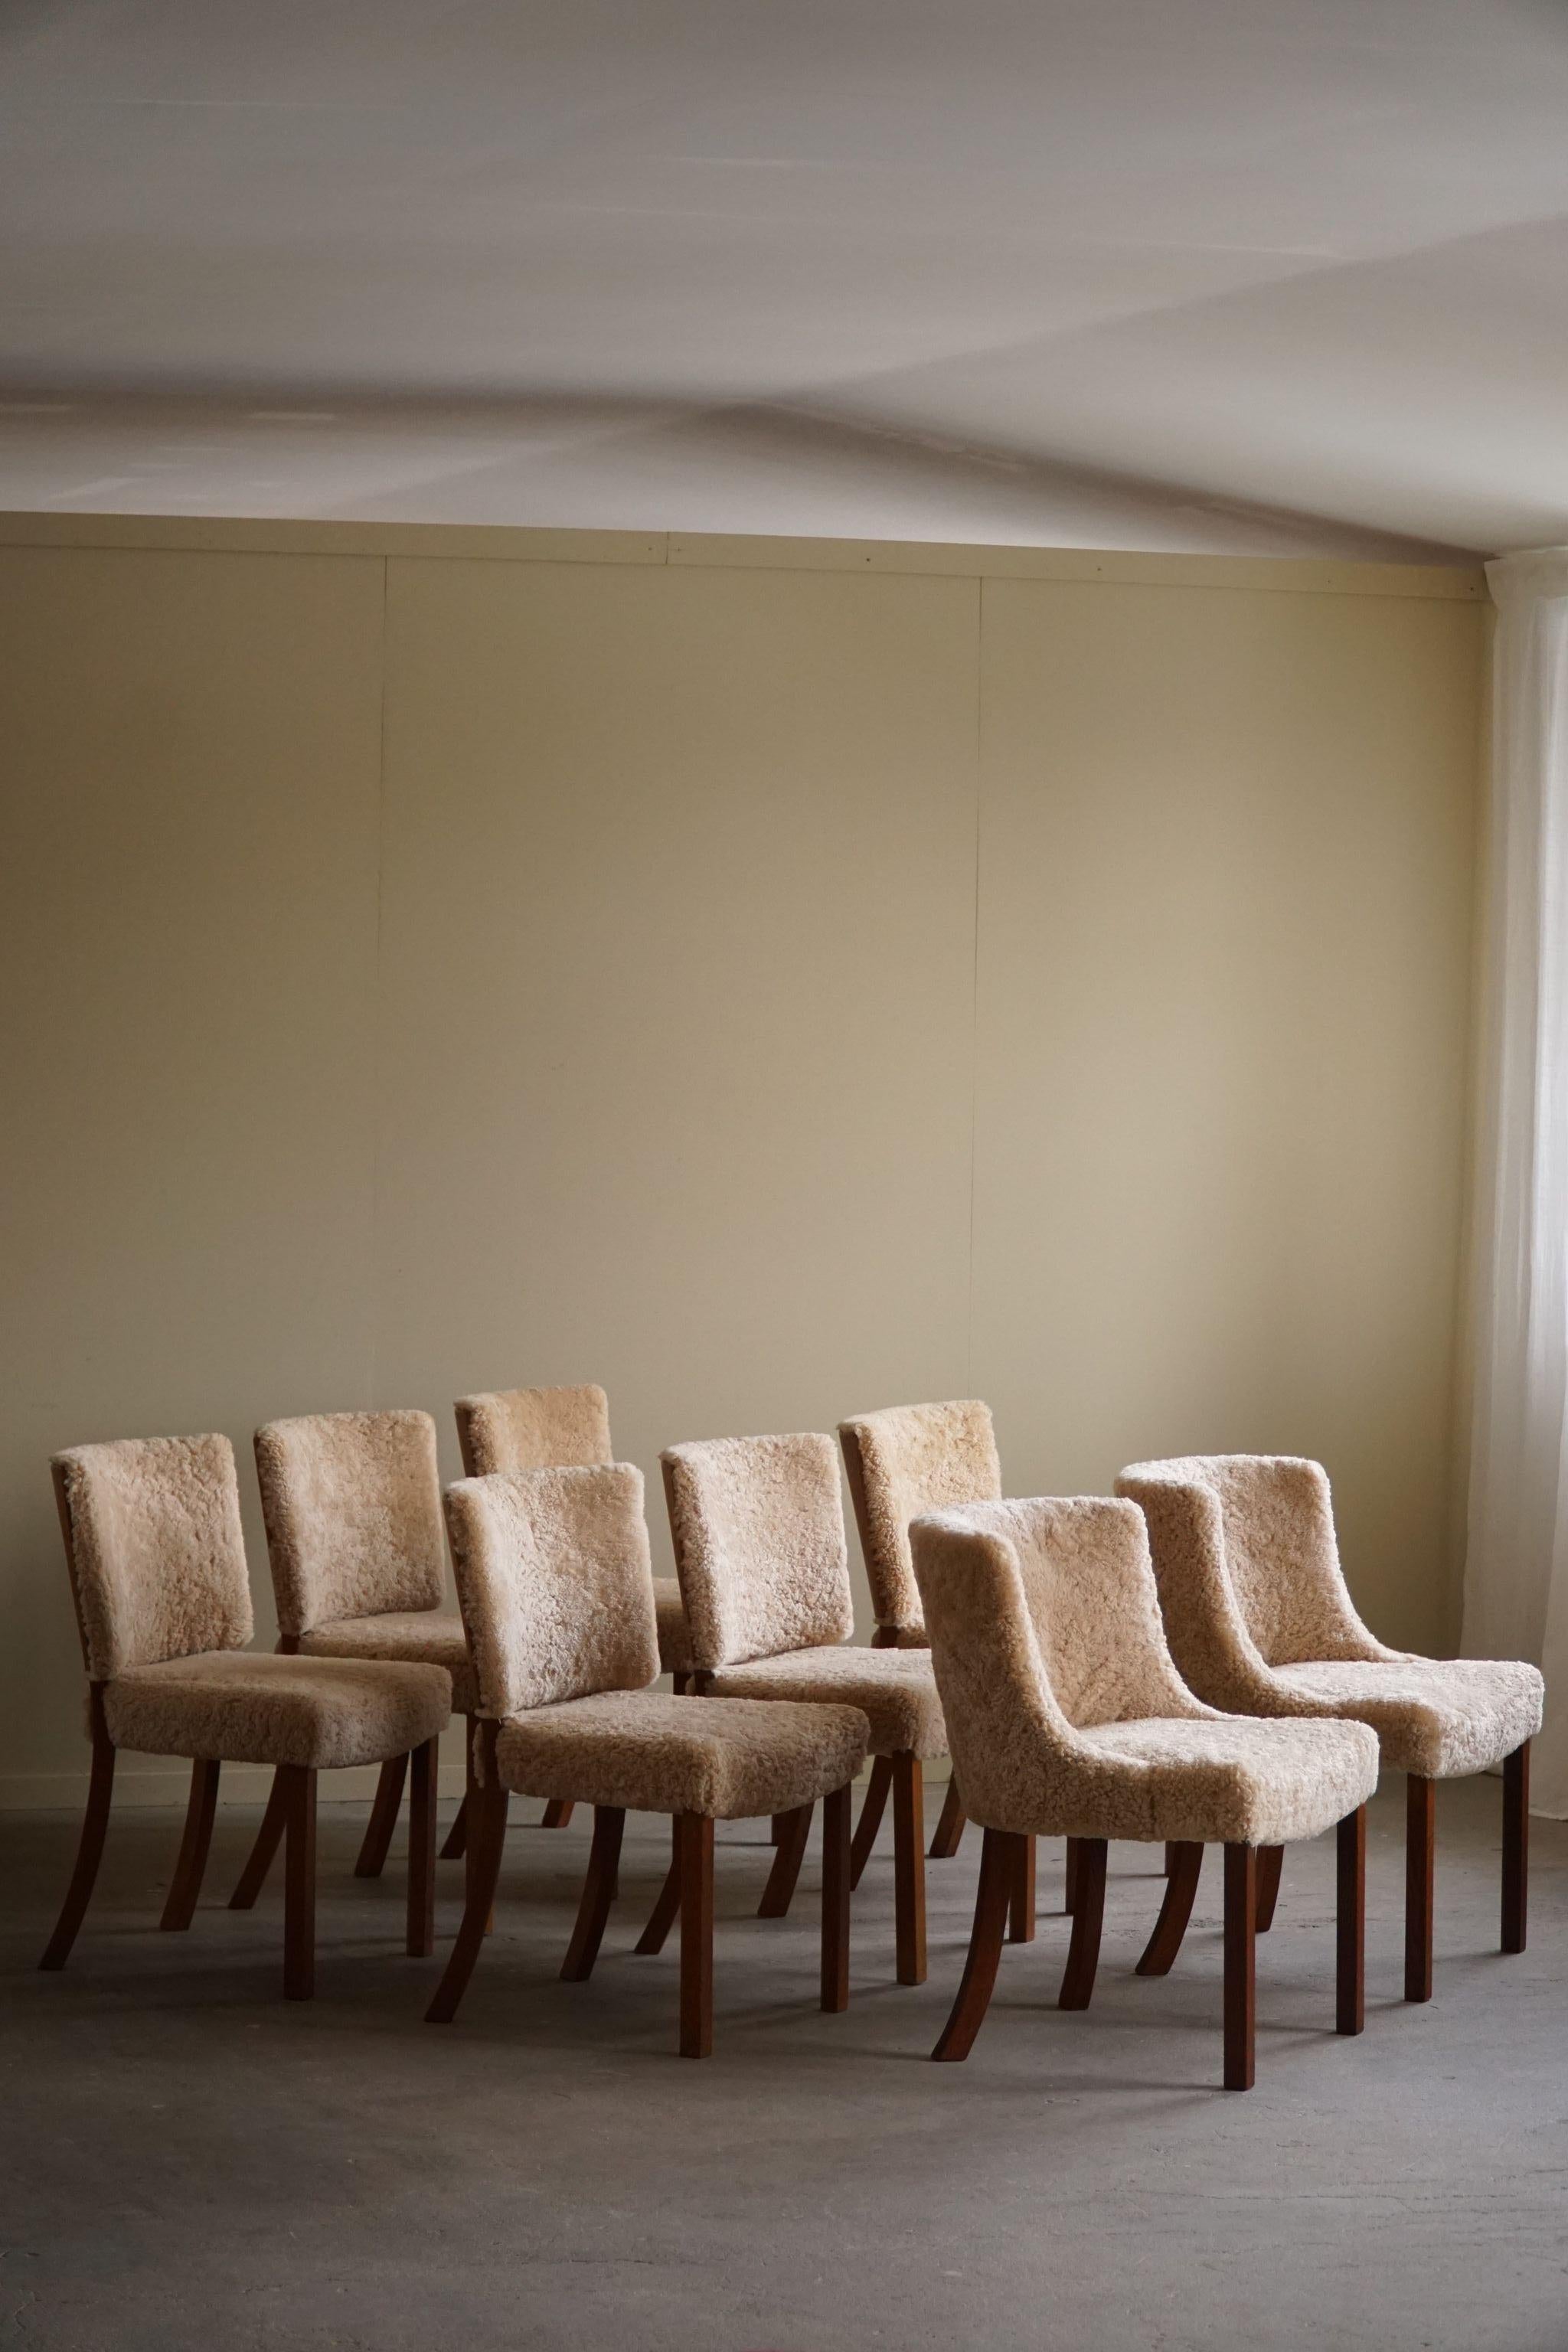 A Pair of Classic Chairs in Oak and Lambswool, Danish Modern, Kaj Gottlob, 1950s For Sale 5